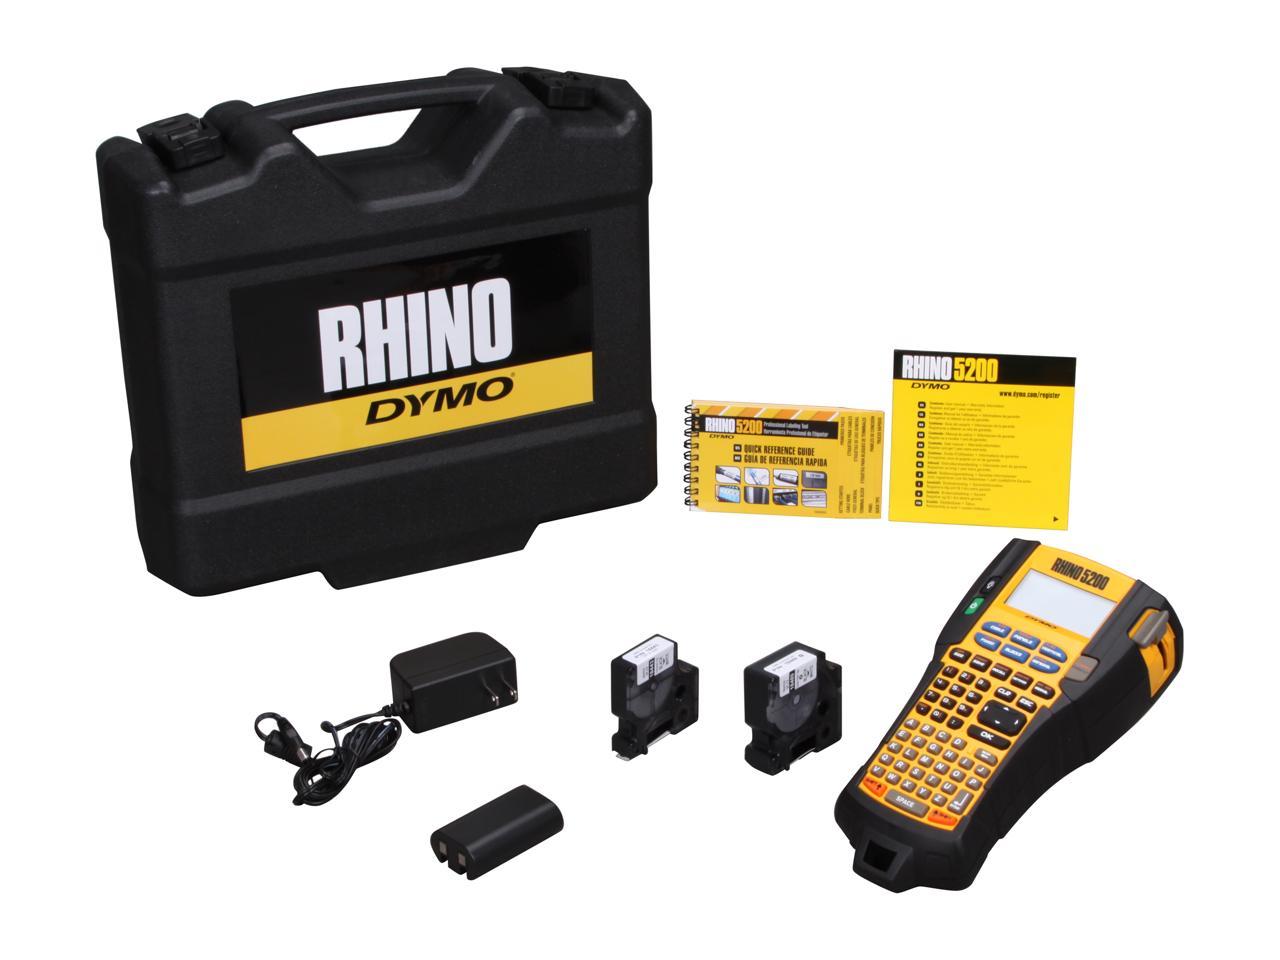 dym1756589 Dymo 1756589 Rhino 5200 Hard Case Kit Industrial Label Printer